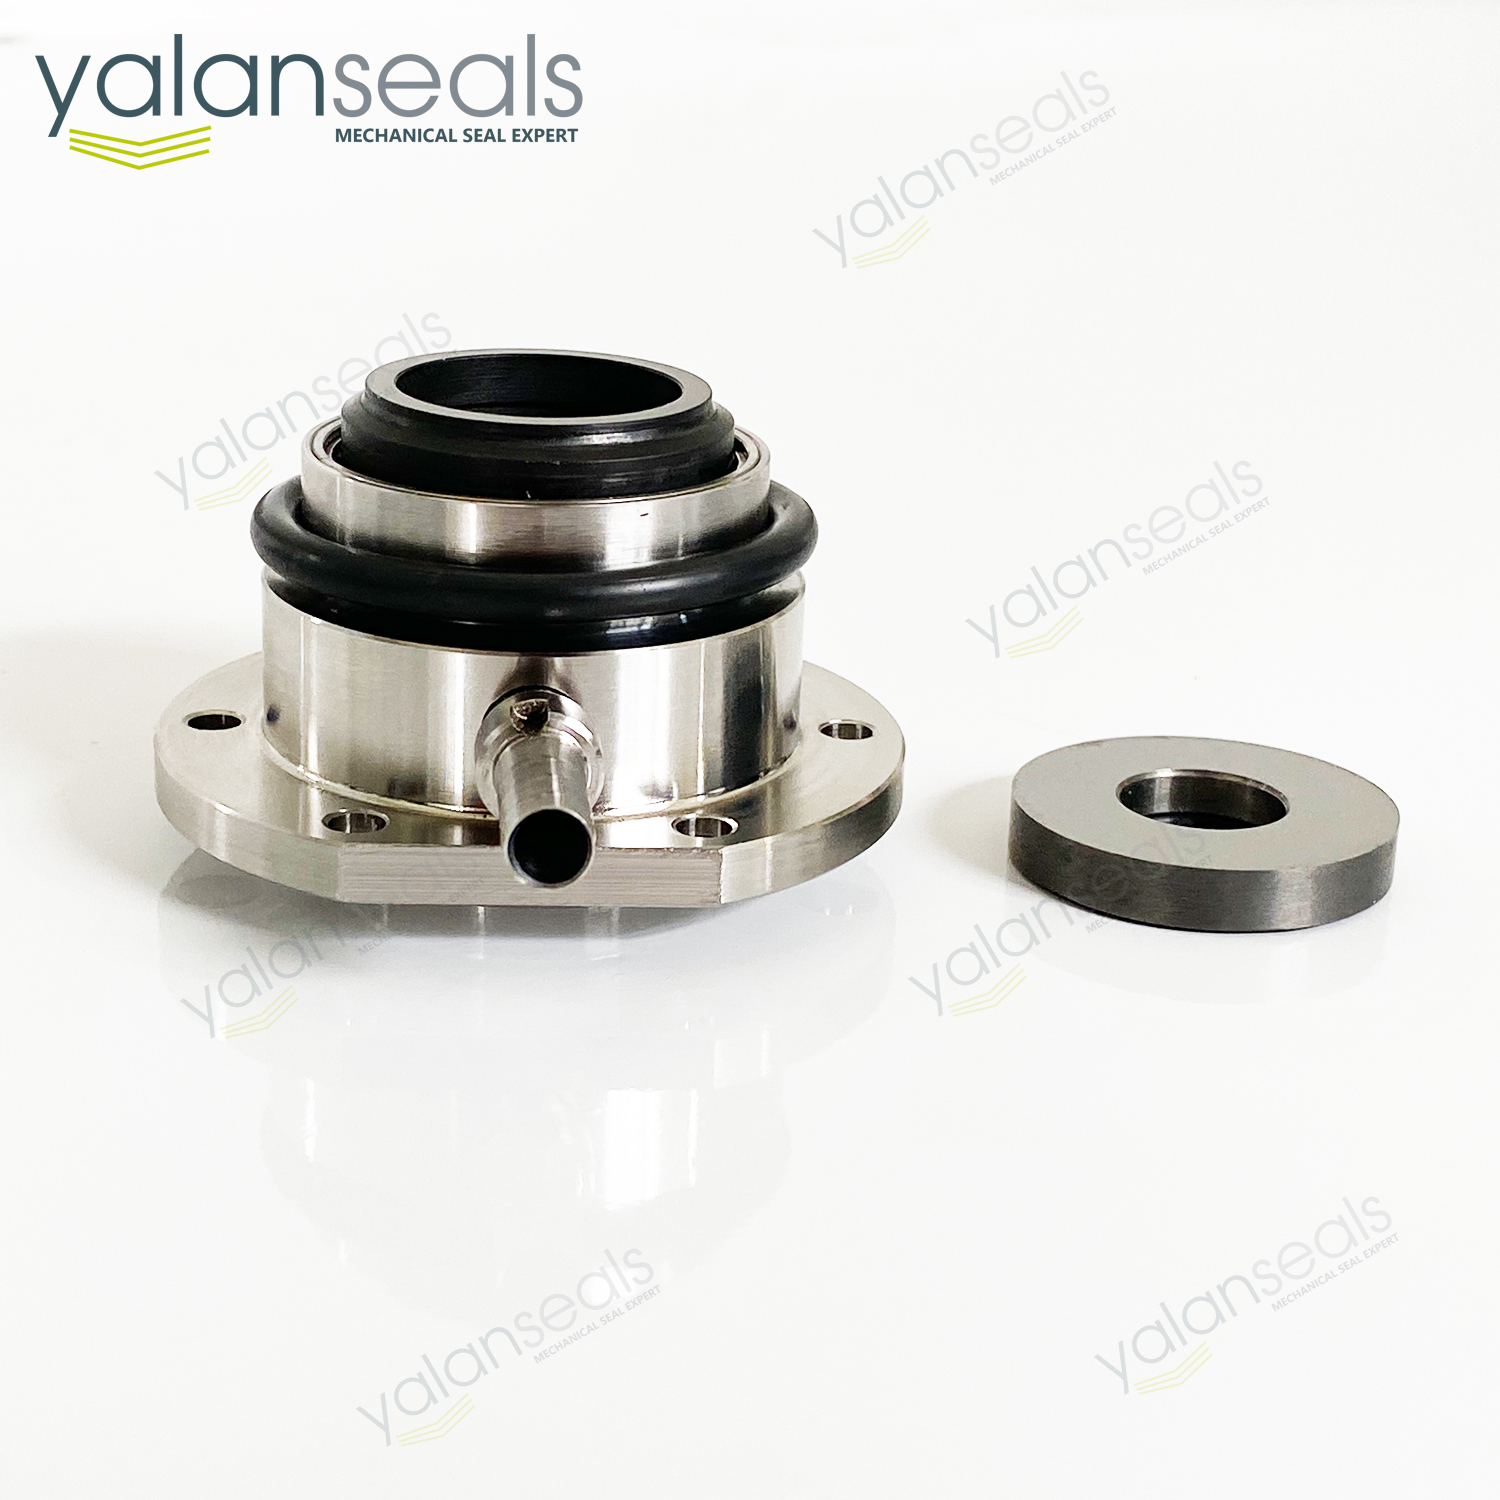 YALAN KJ23-14 Mechanical Seal for Liquid Cooling Pumps on S300 Air Defense System